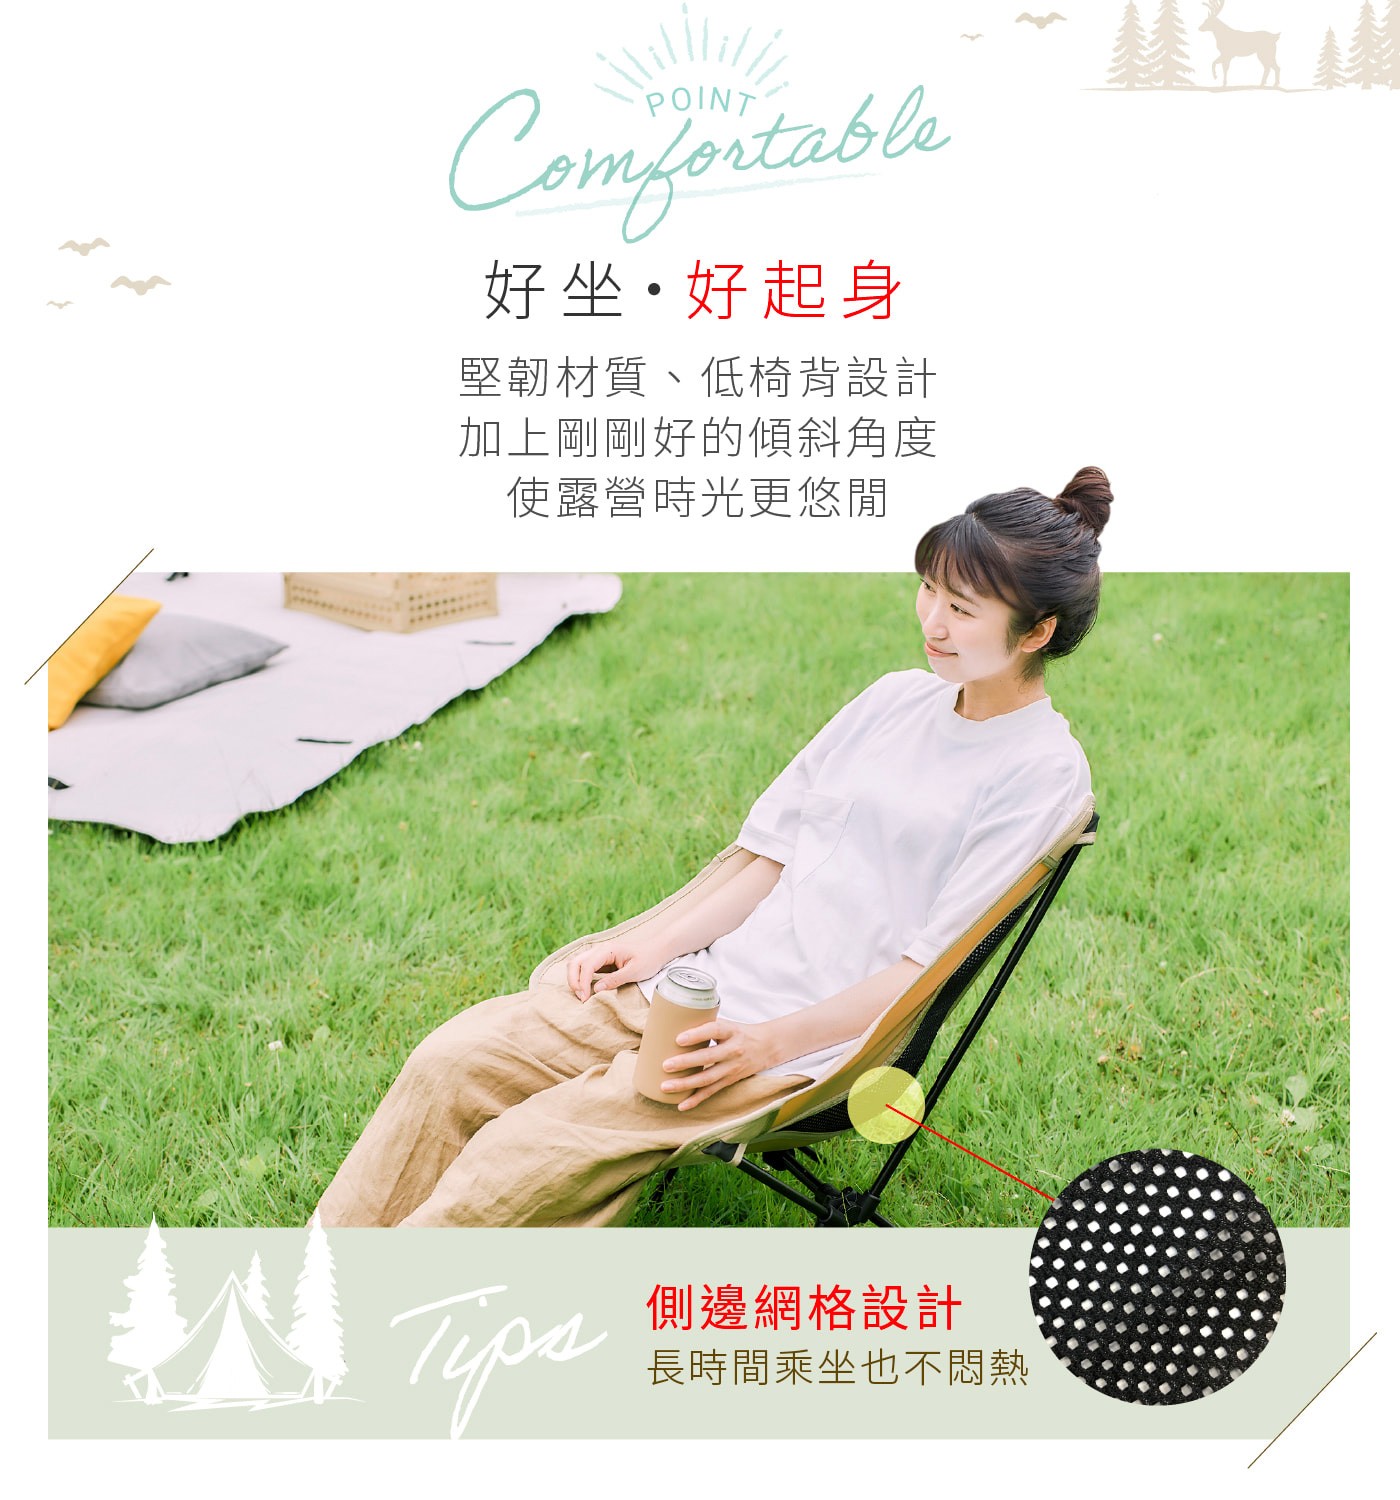 IRIS OHYAMA 露營椅 CC-LOW好坐好起身堅韌材質低椅背設計加上剛好地傾斜角度使露營時光更悠閒自在